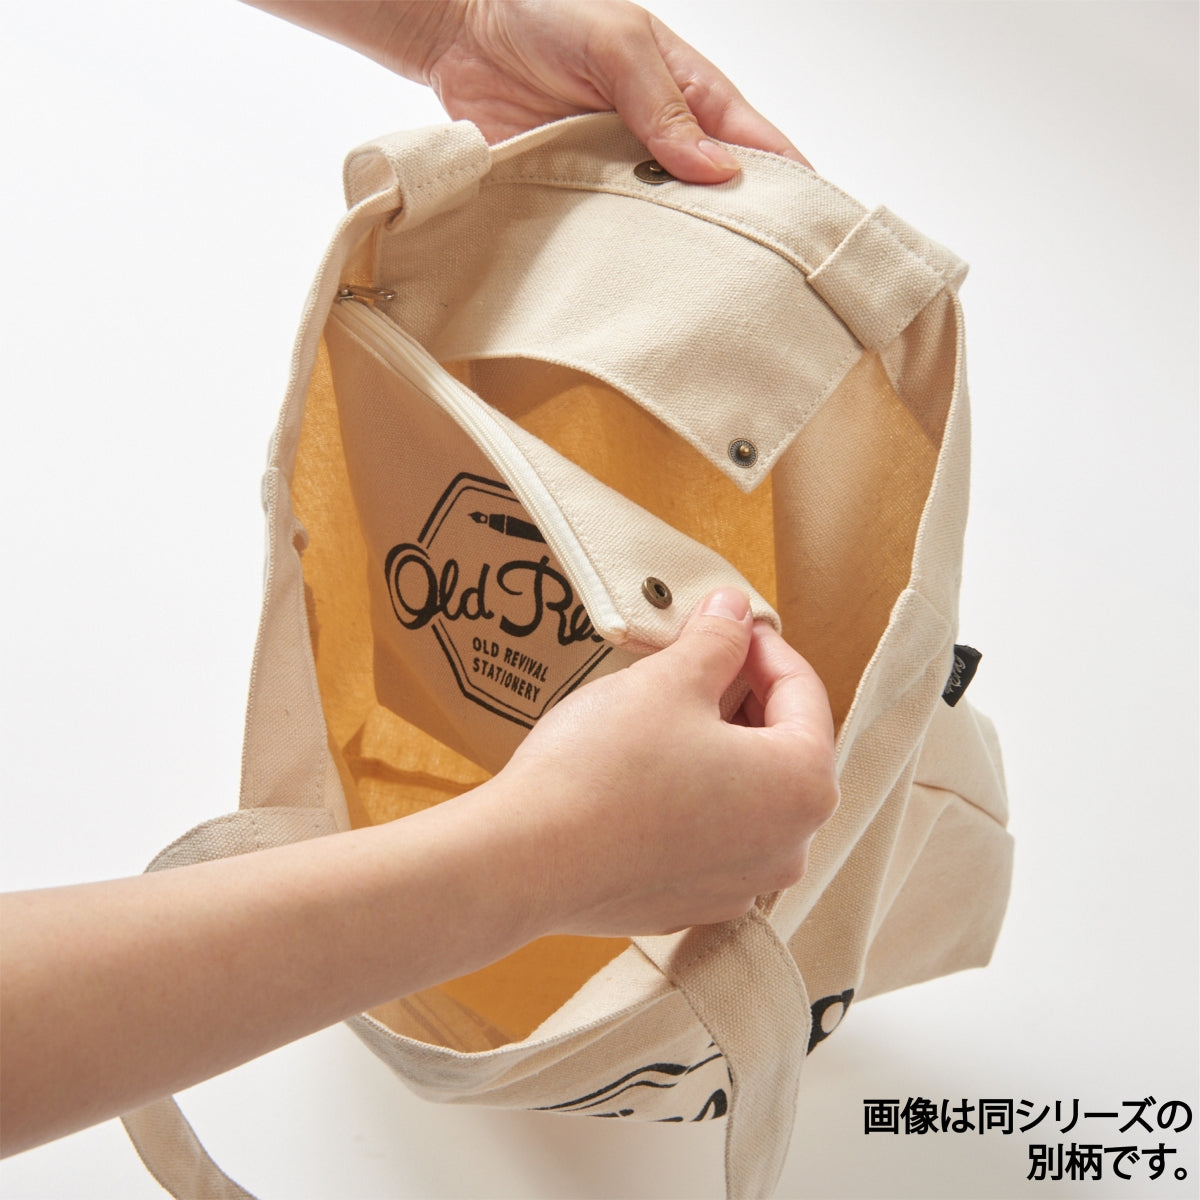 Old Resta Shachihata Tote Bag, Bungujoshi Special Edition, 2 in 1